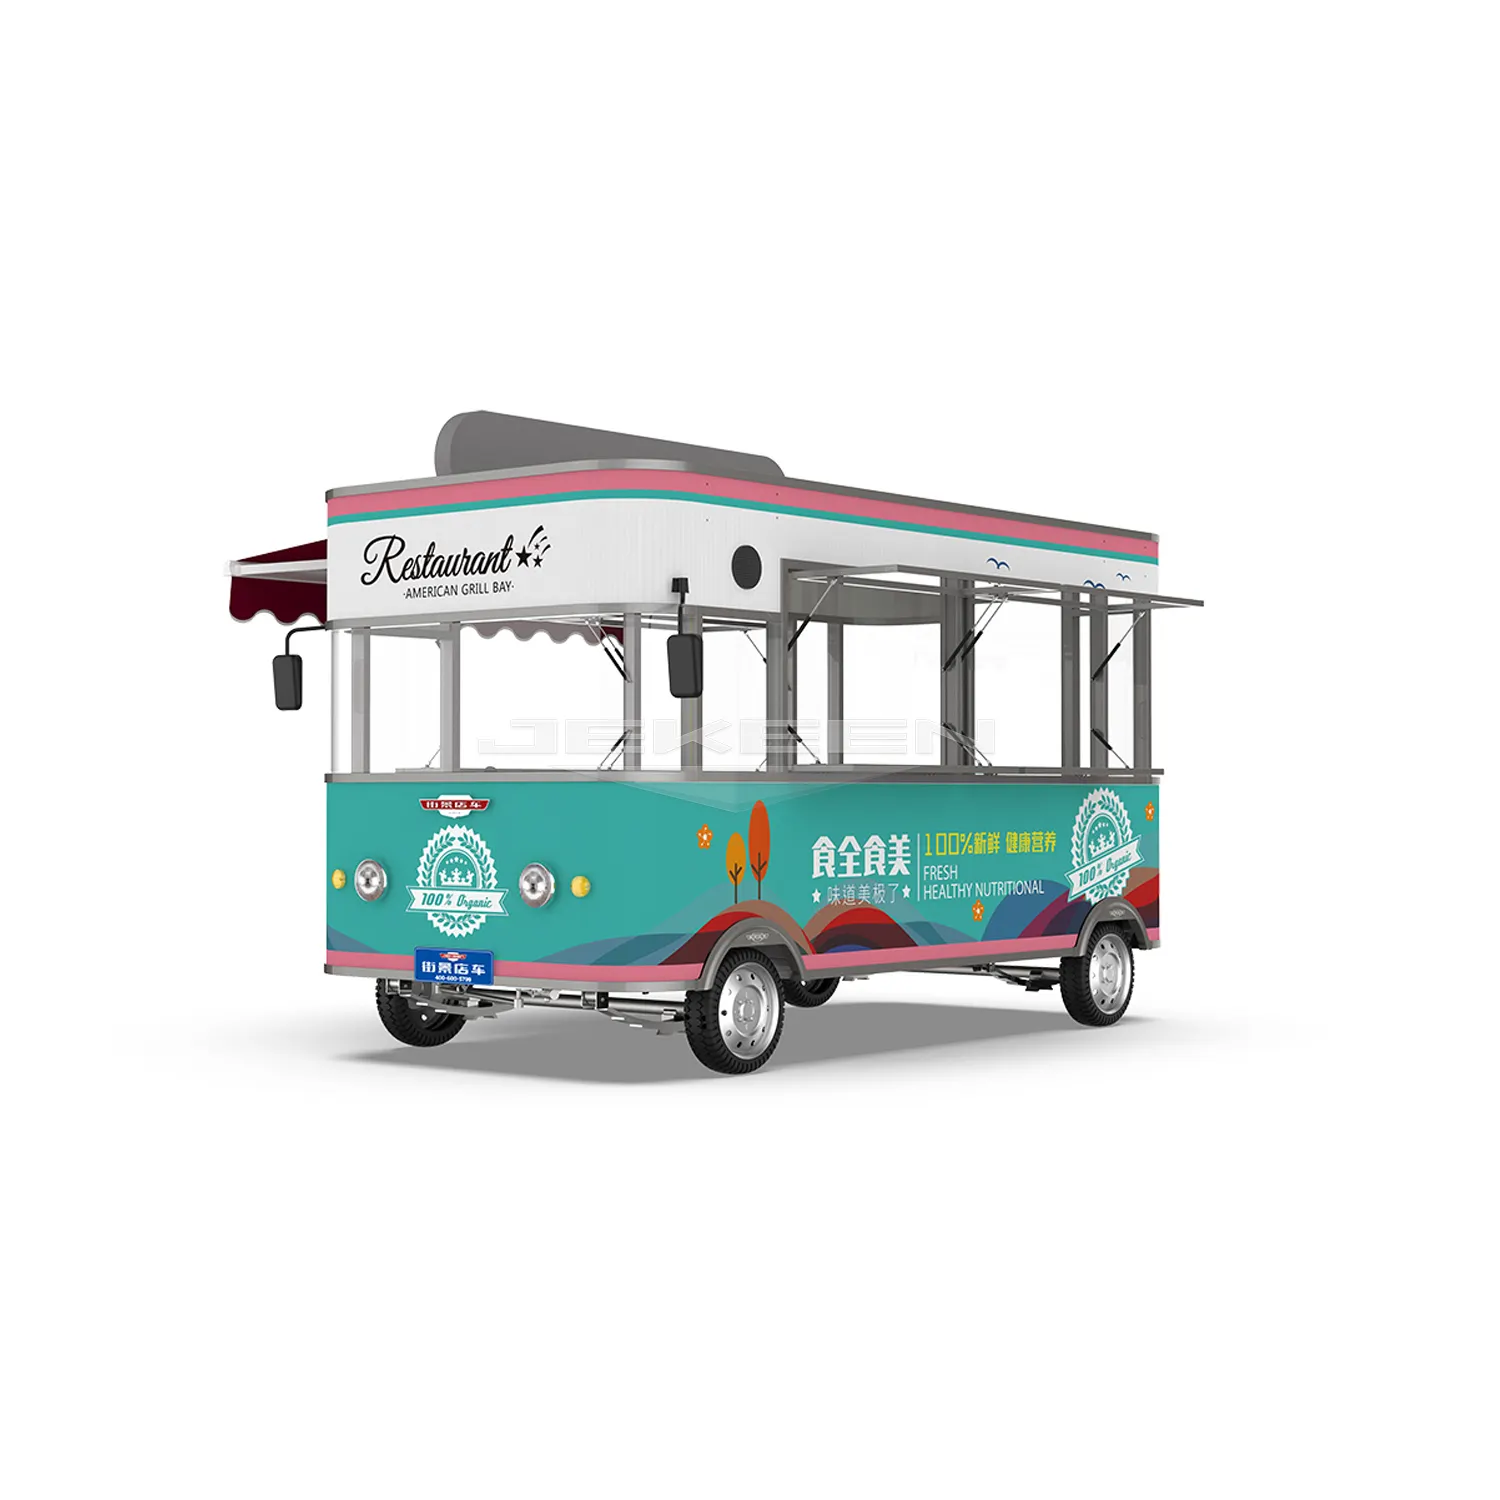 JEKEEN Fast Fitted Food Cart Totalmente Equipado Mobile Restaurant Machine Snack Street Food Car Truck Bus Usado Venda